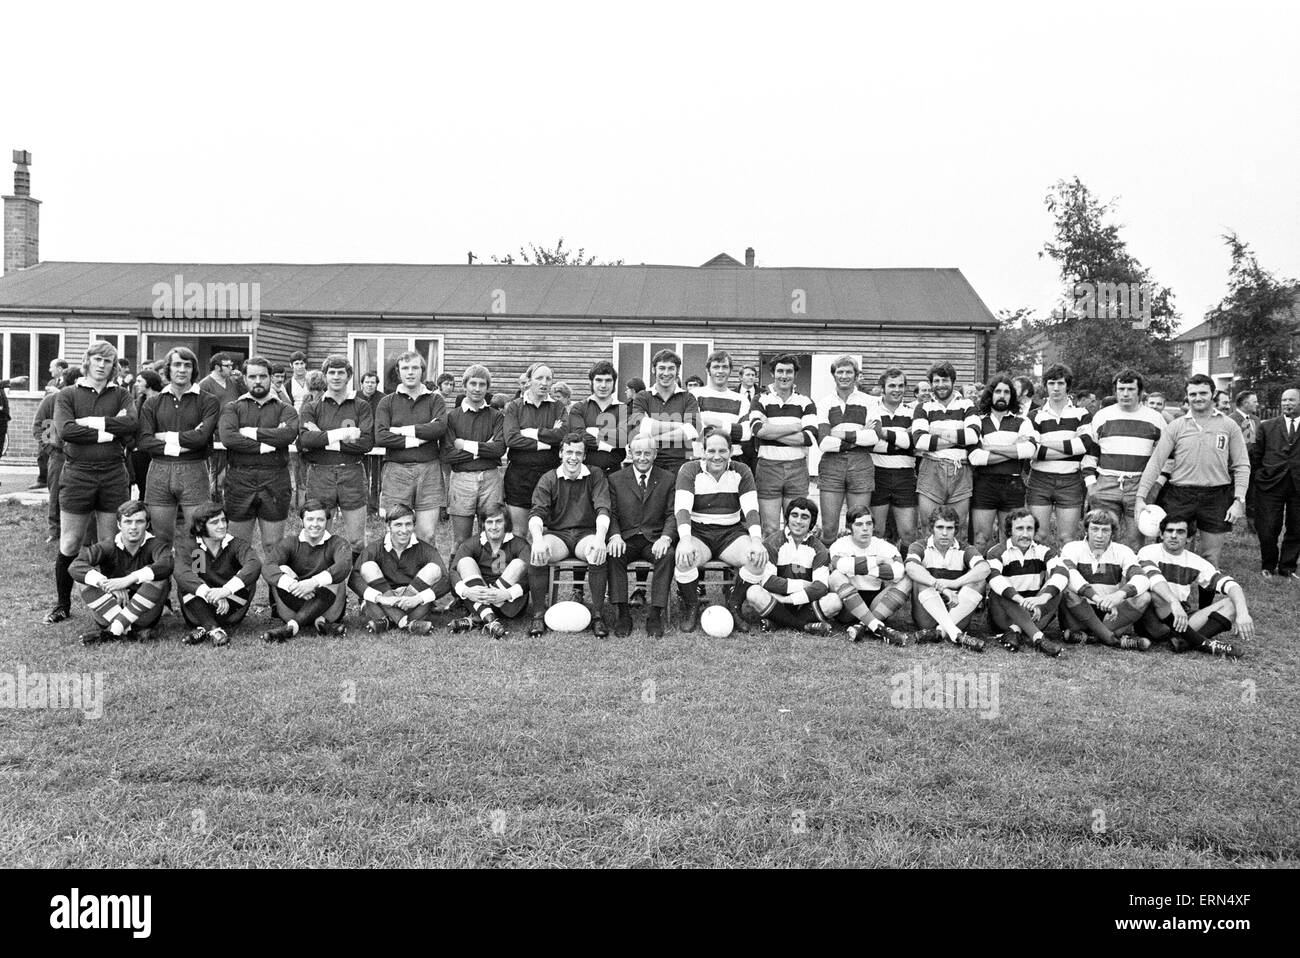 Stoke Old Boys v Phil Judd 15 Rugby Match, 28th September 1971 Stock Photo